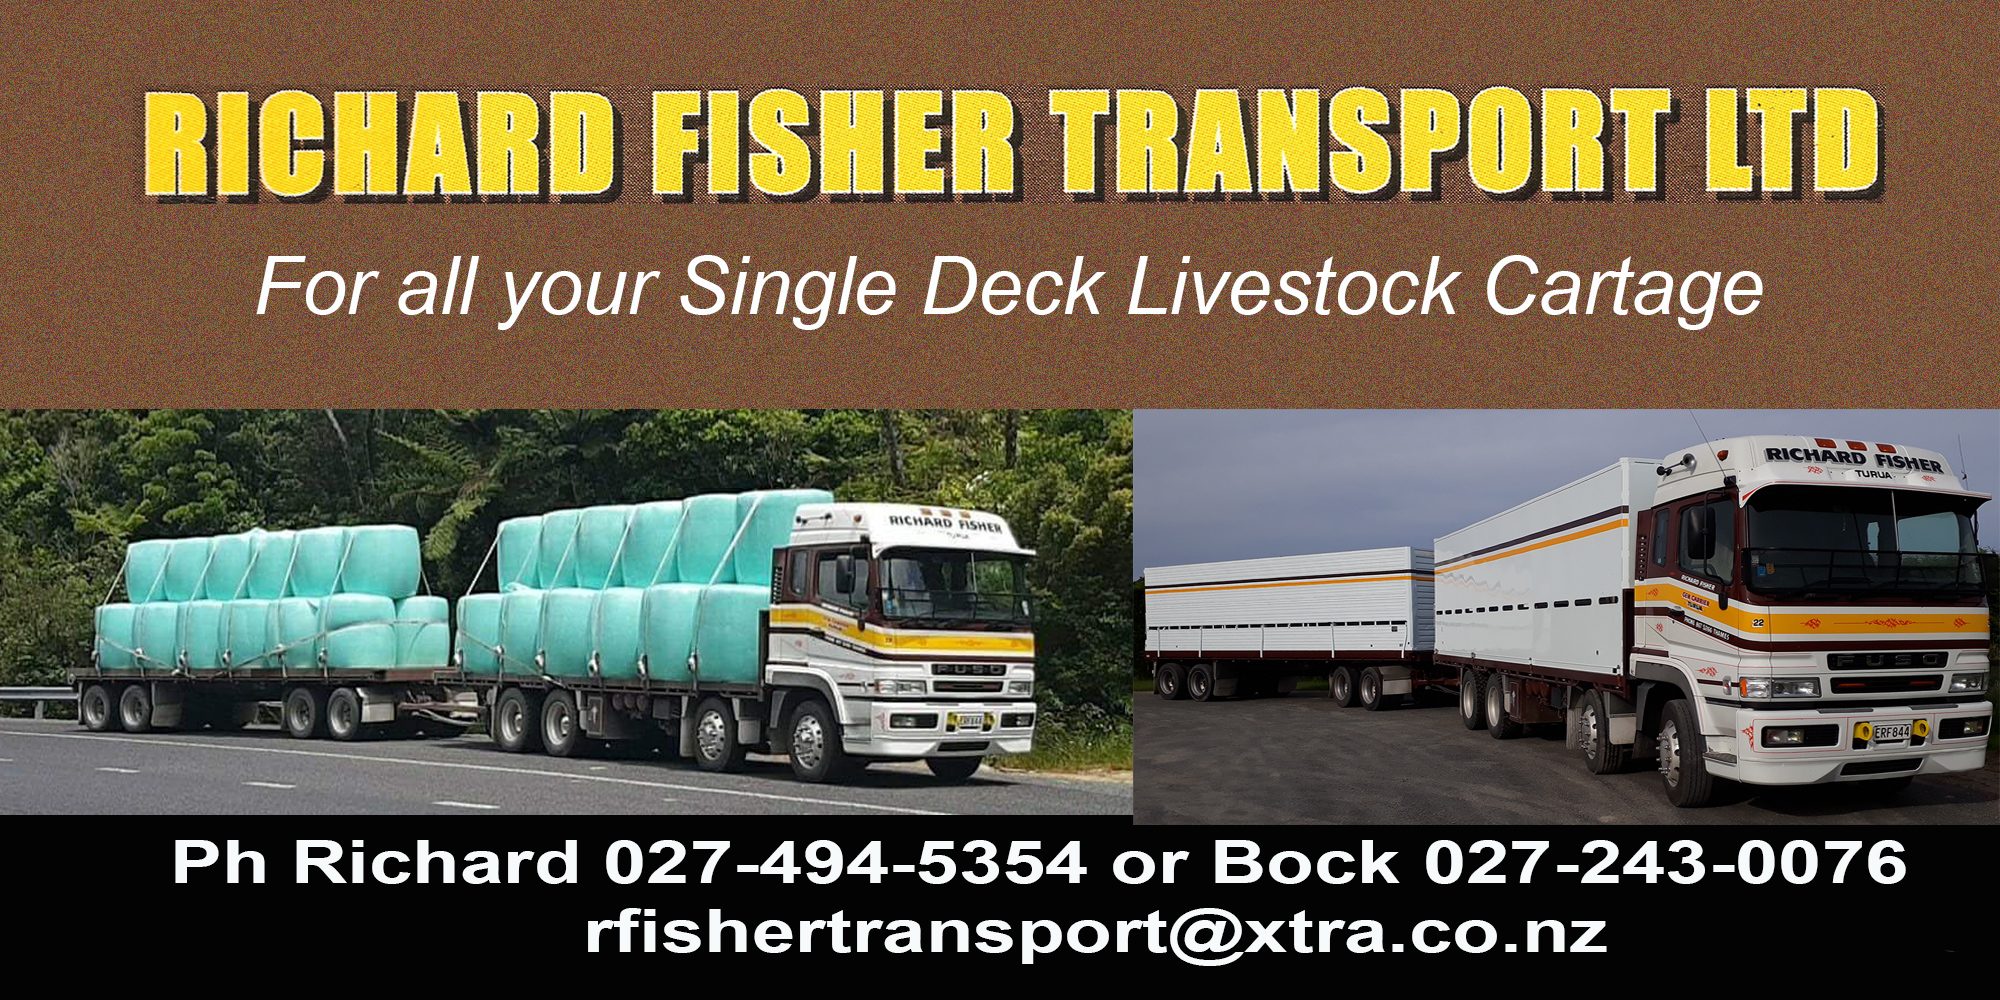 Richard Fisher Transport